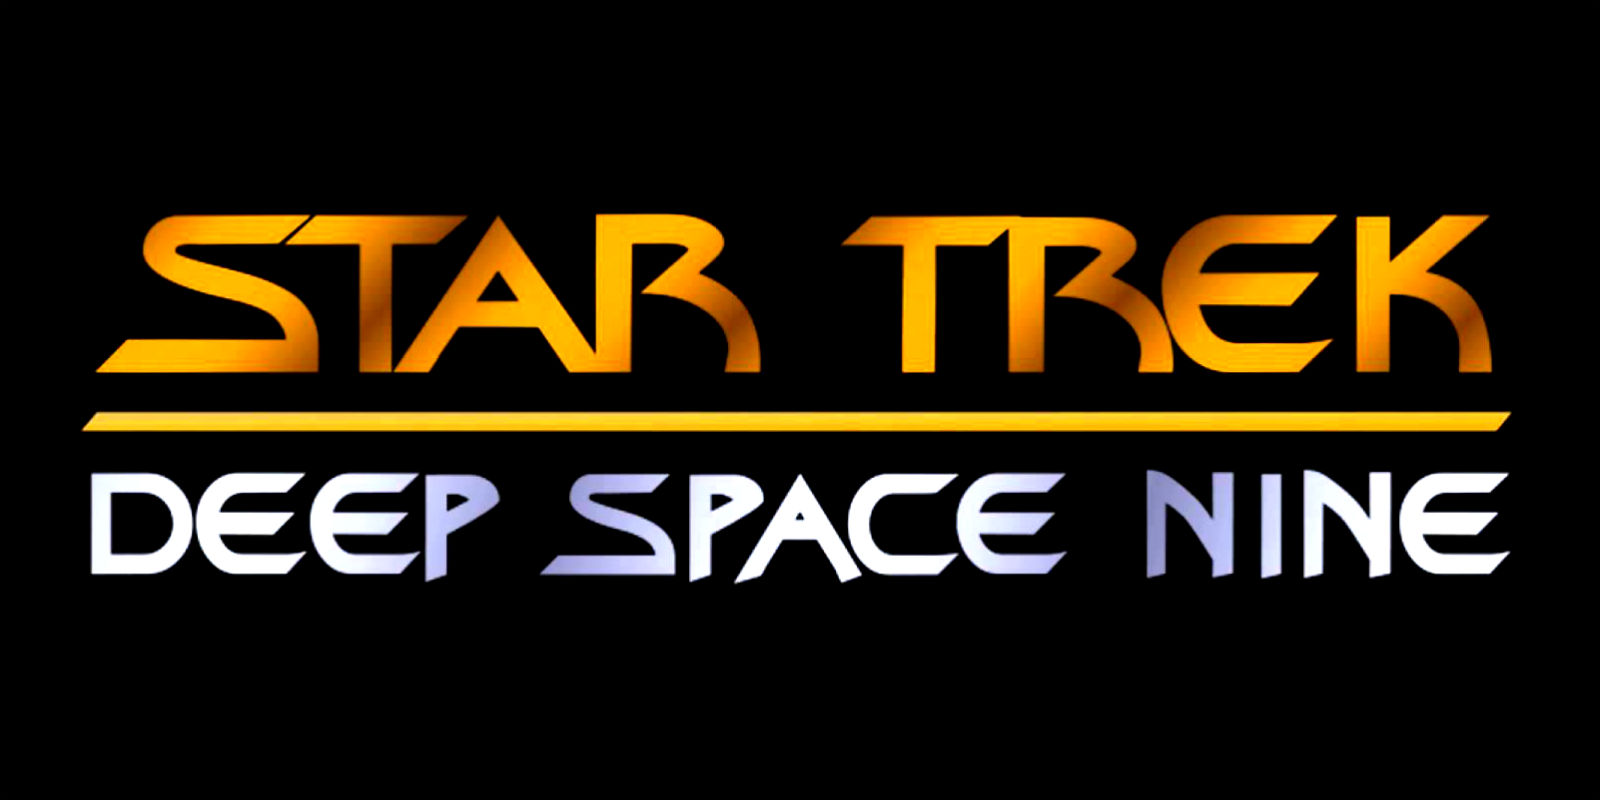 Star Trek: Deep Space Nine #4